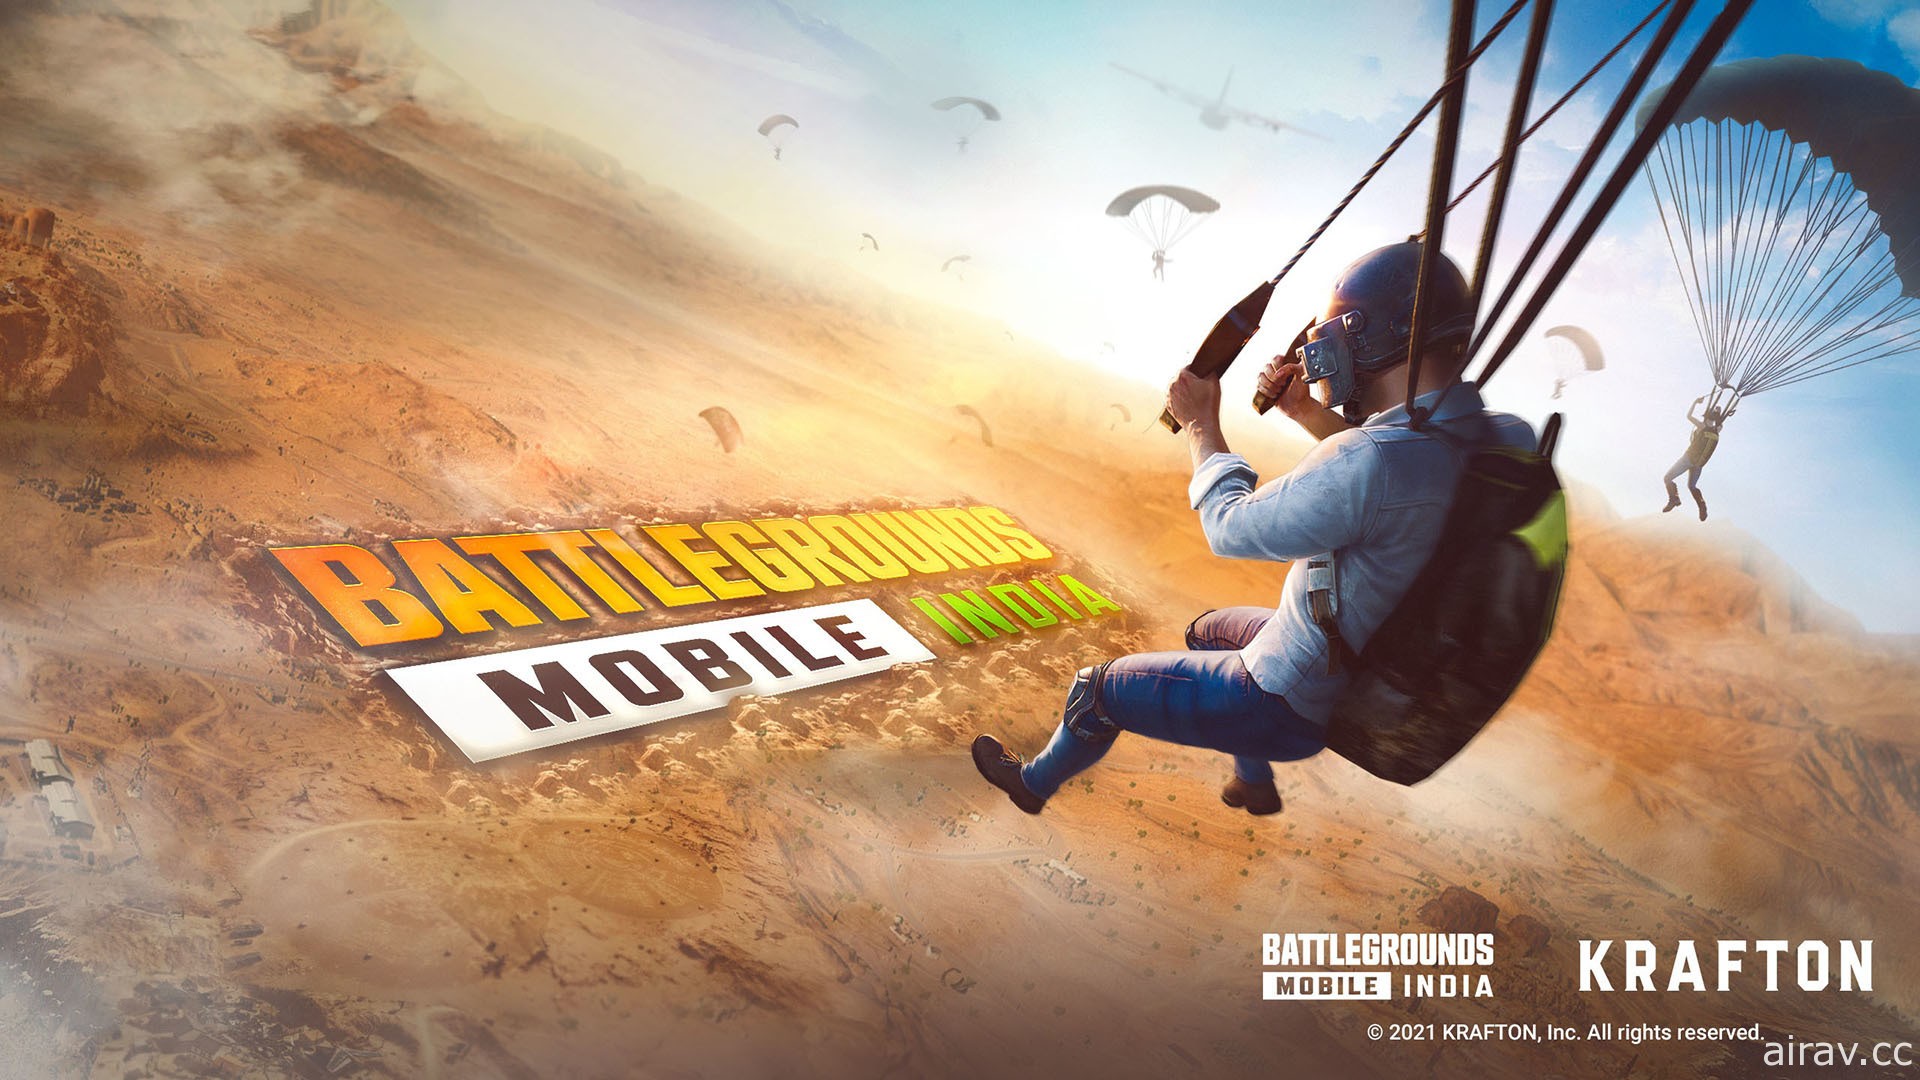 《BATTLEGROUNDS MOBILE INDIA》预先注册突破 2,000 万 重新打入印度市场